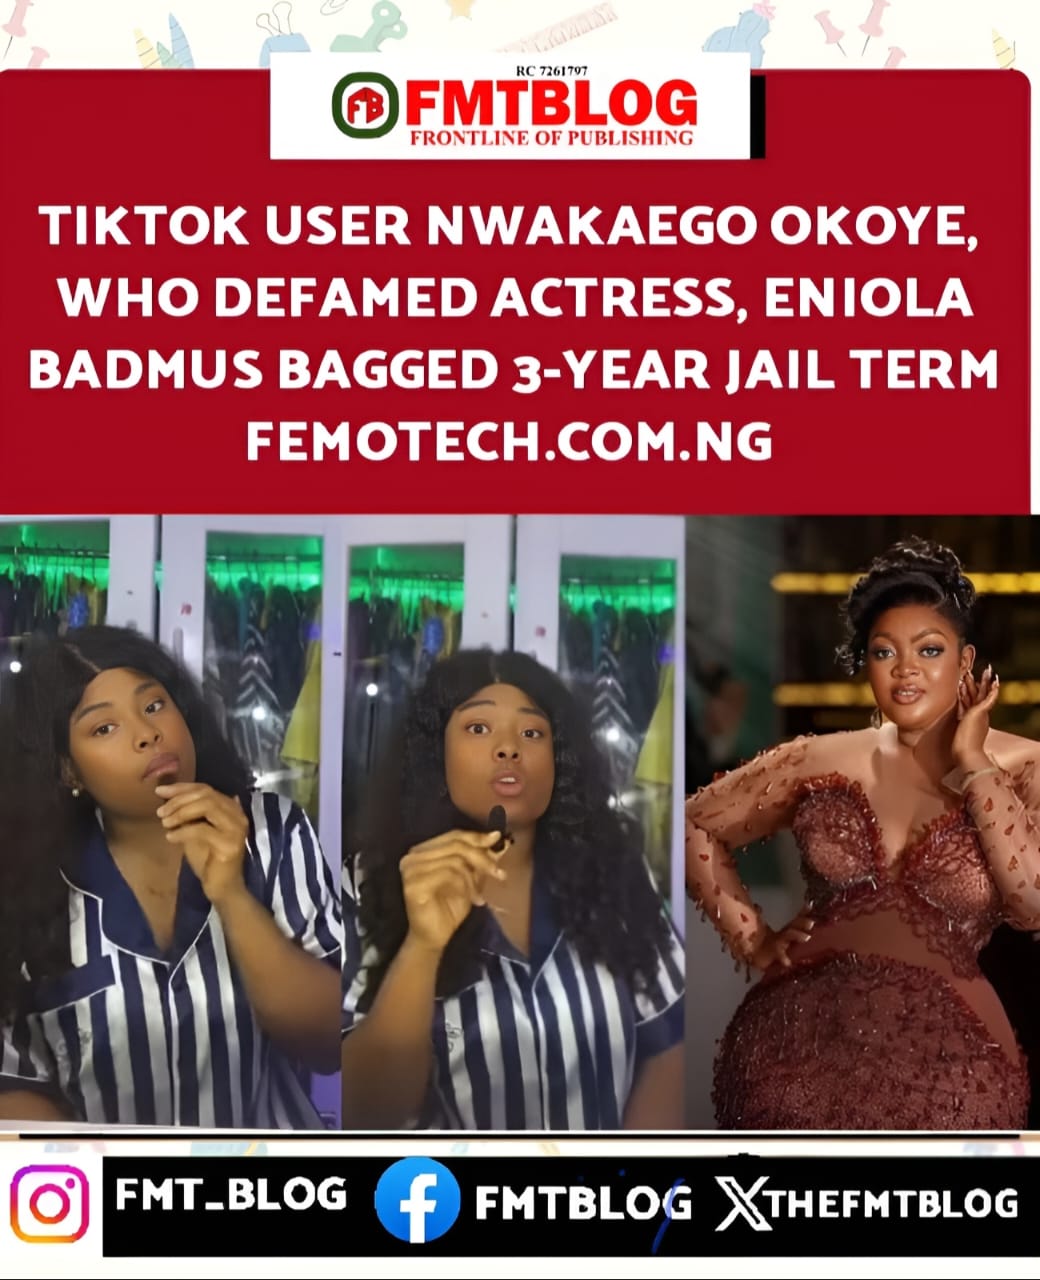 TikTok User Nwakaego Okoye, Who Defamed Actress Eniola Badmus, Bagged 3-Year Jail Term